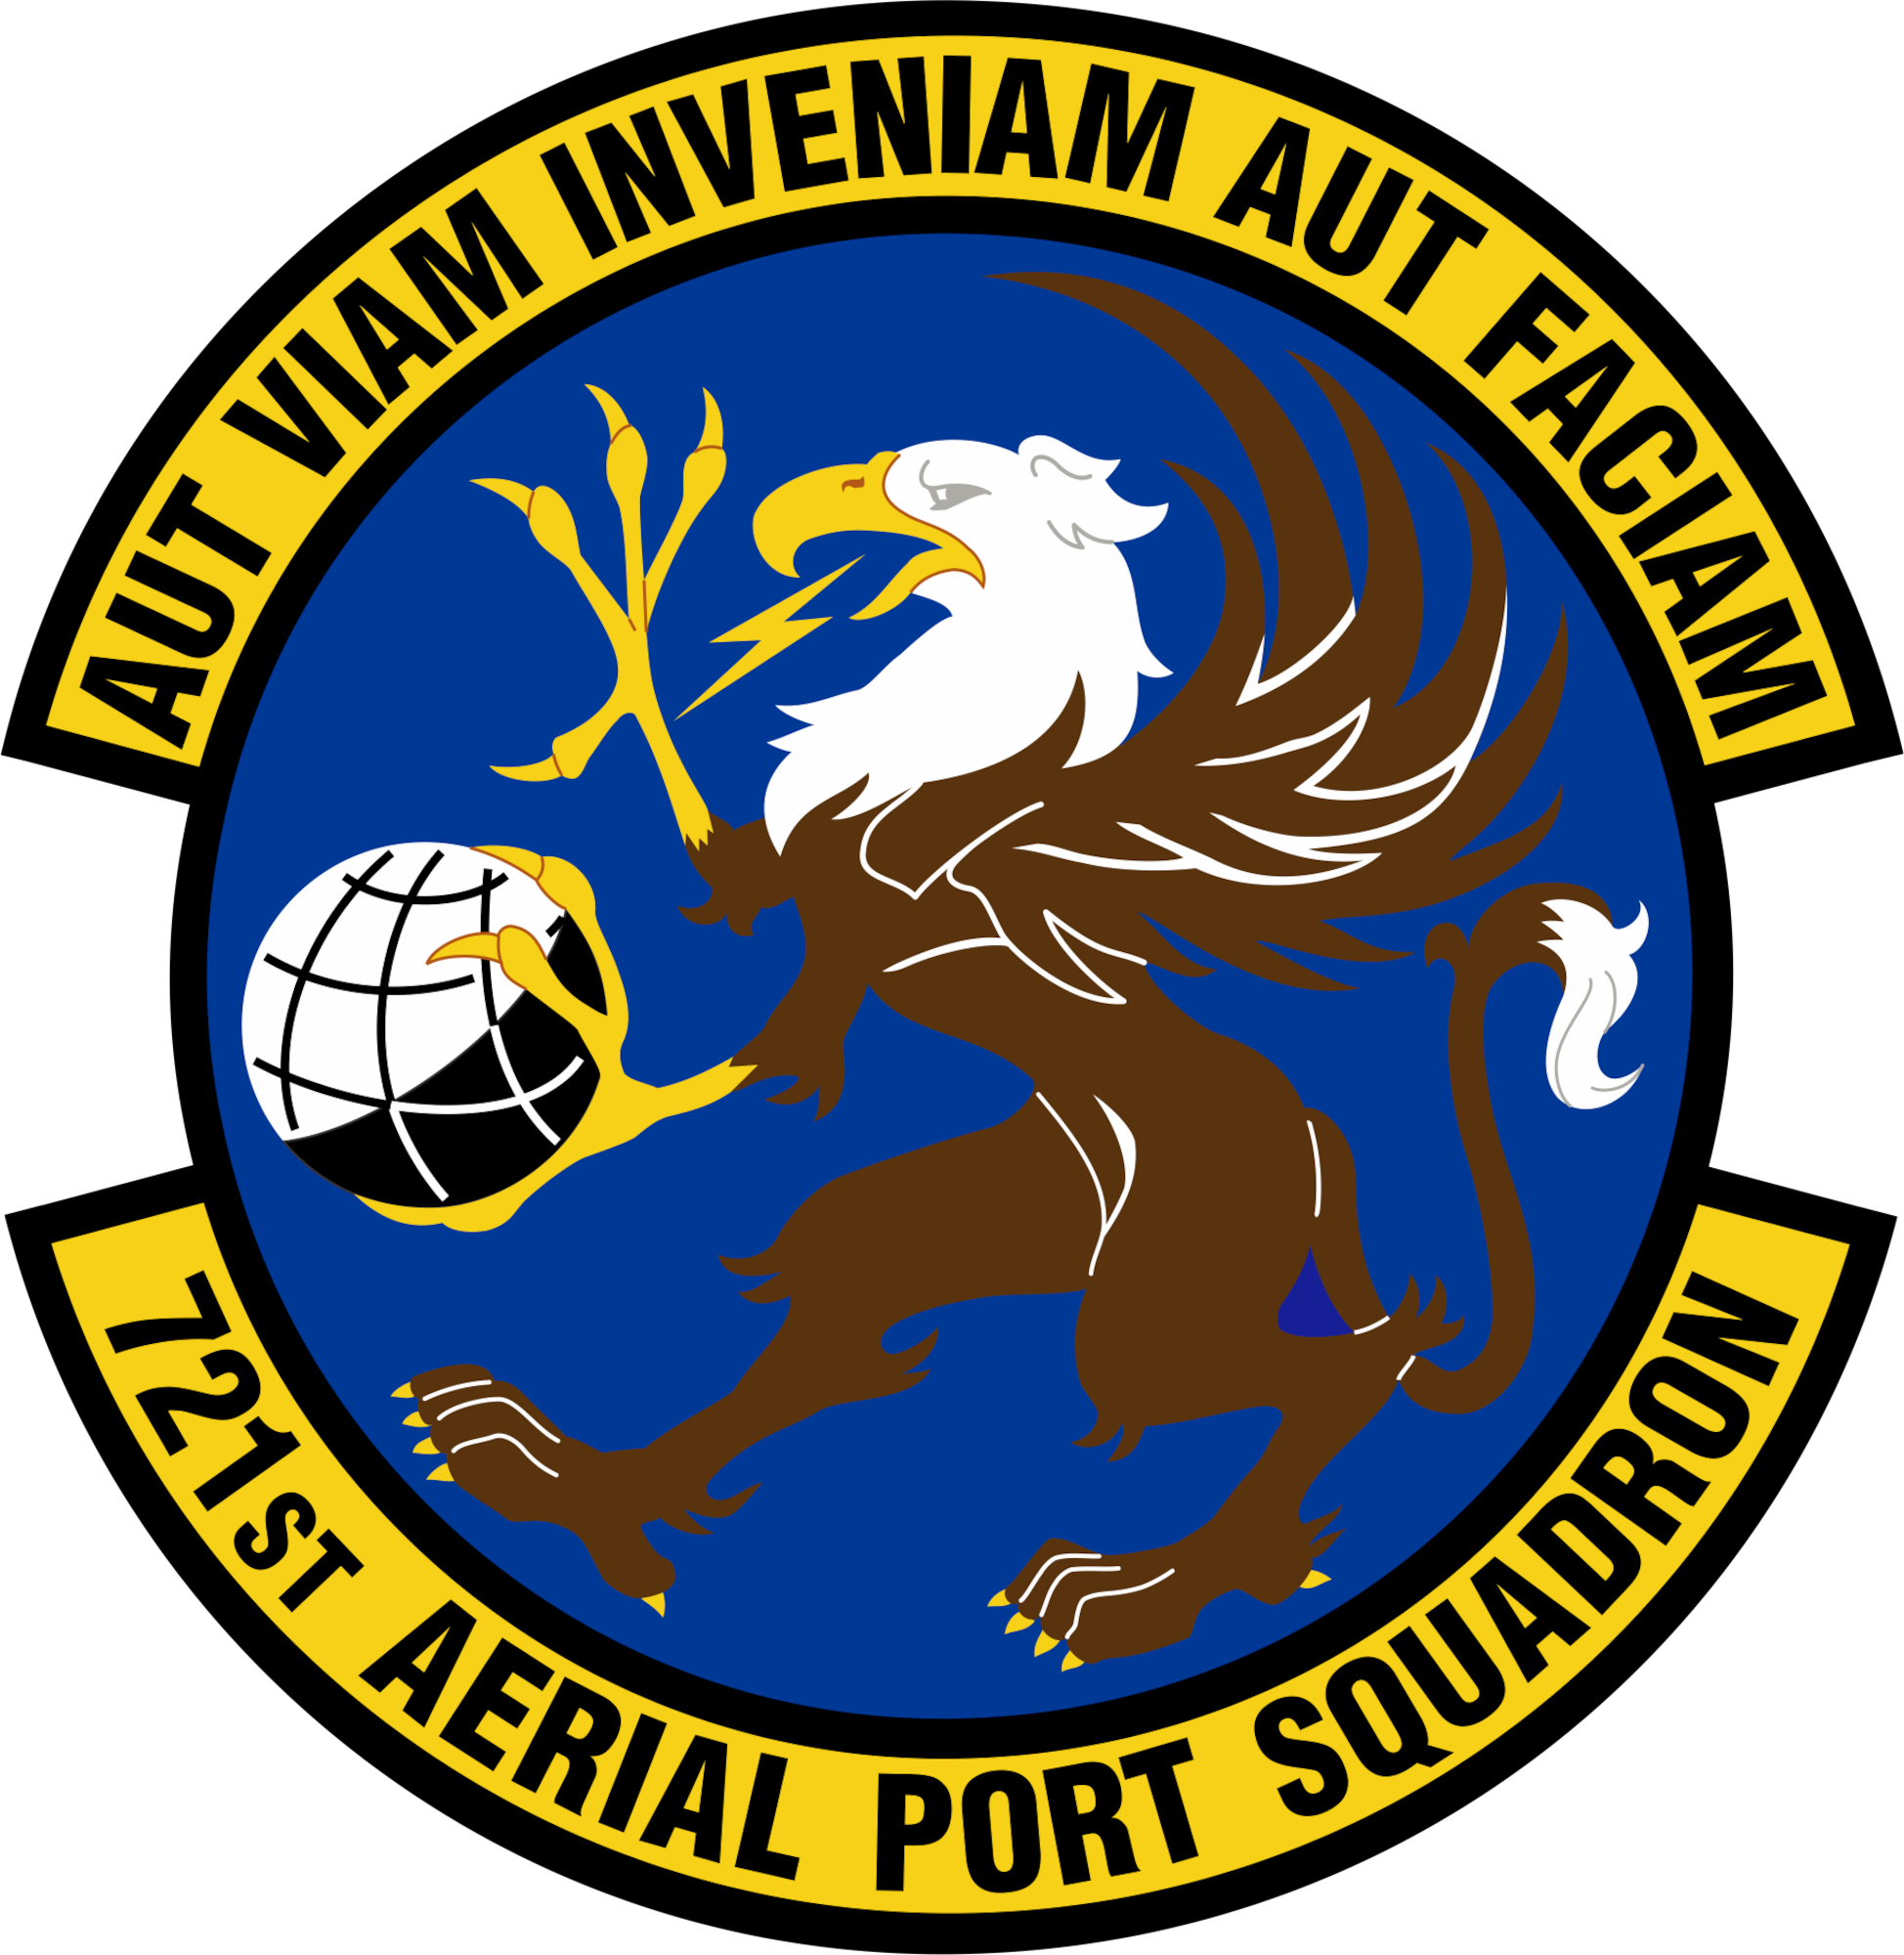 721st Aerial Port Squadron Shield